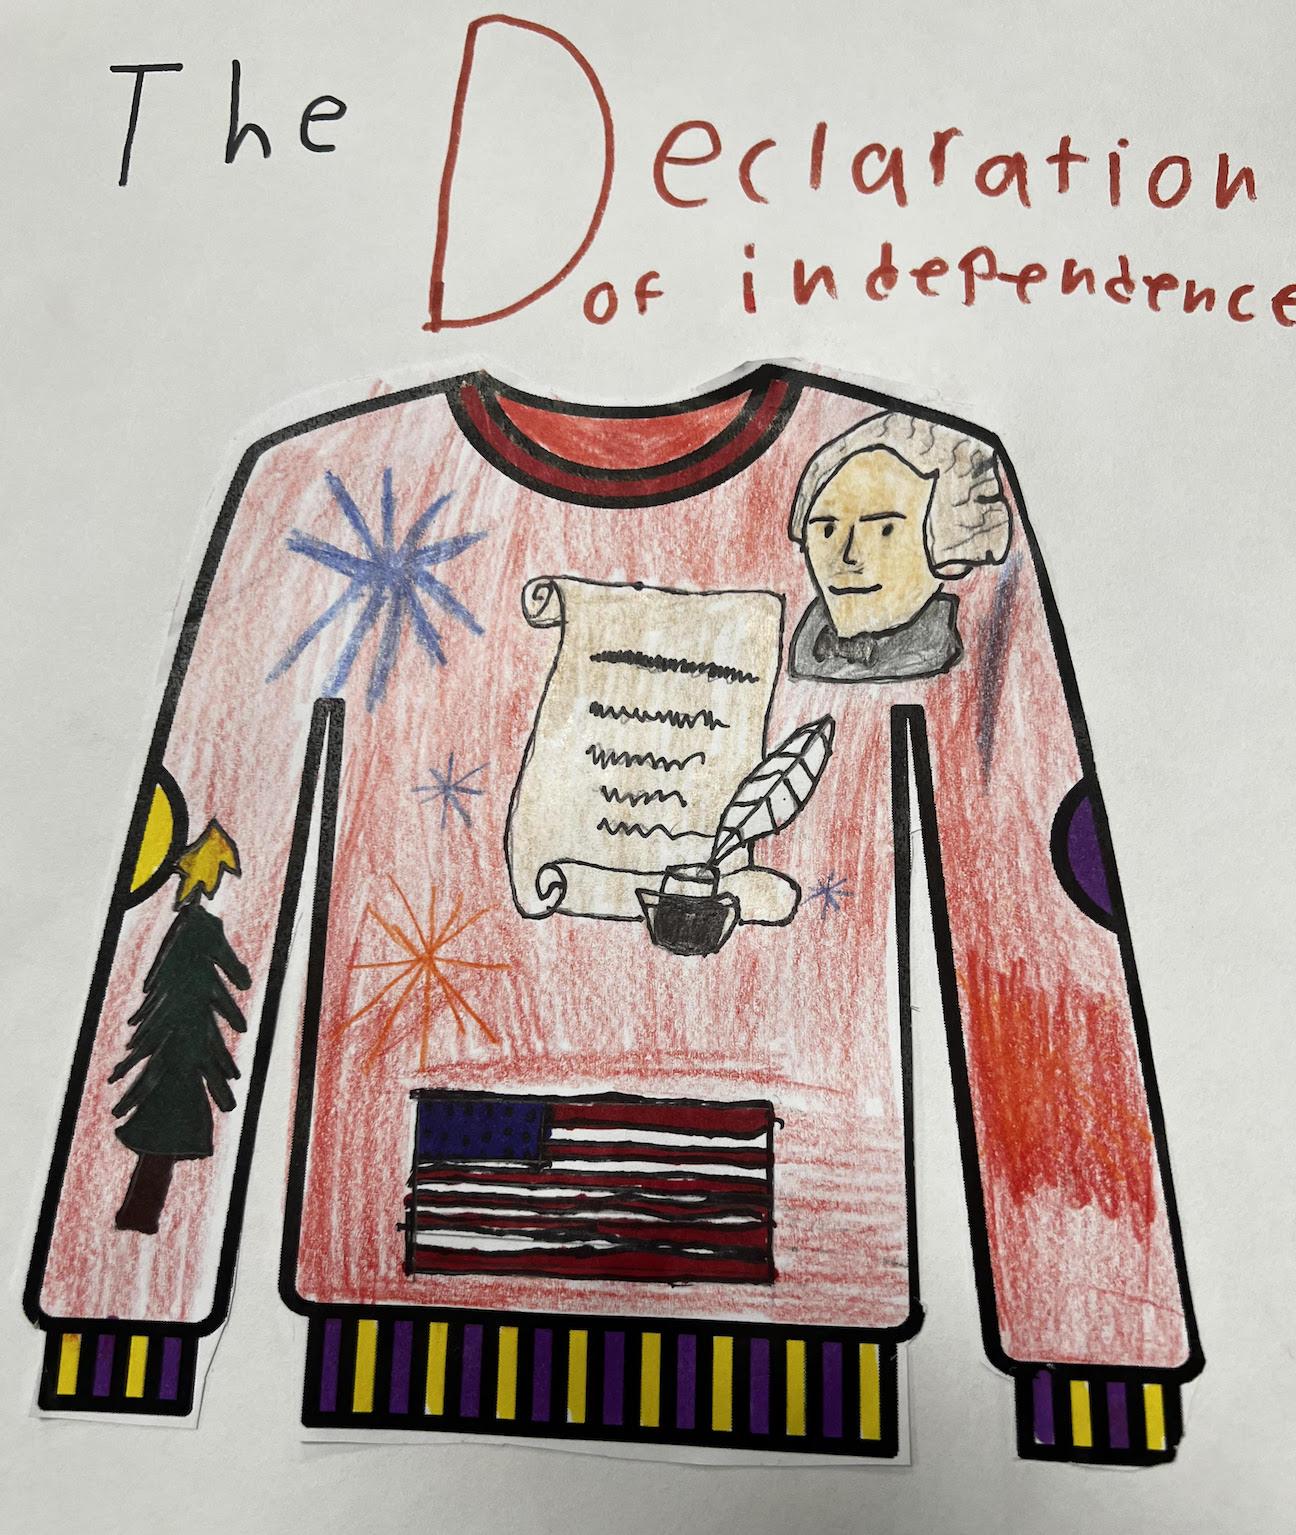 Mackenzie Schmidt illustrated the Declaration of Independence